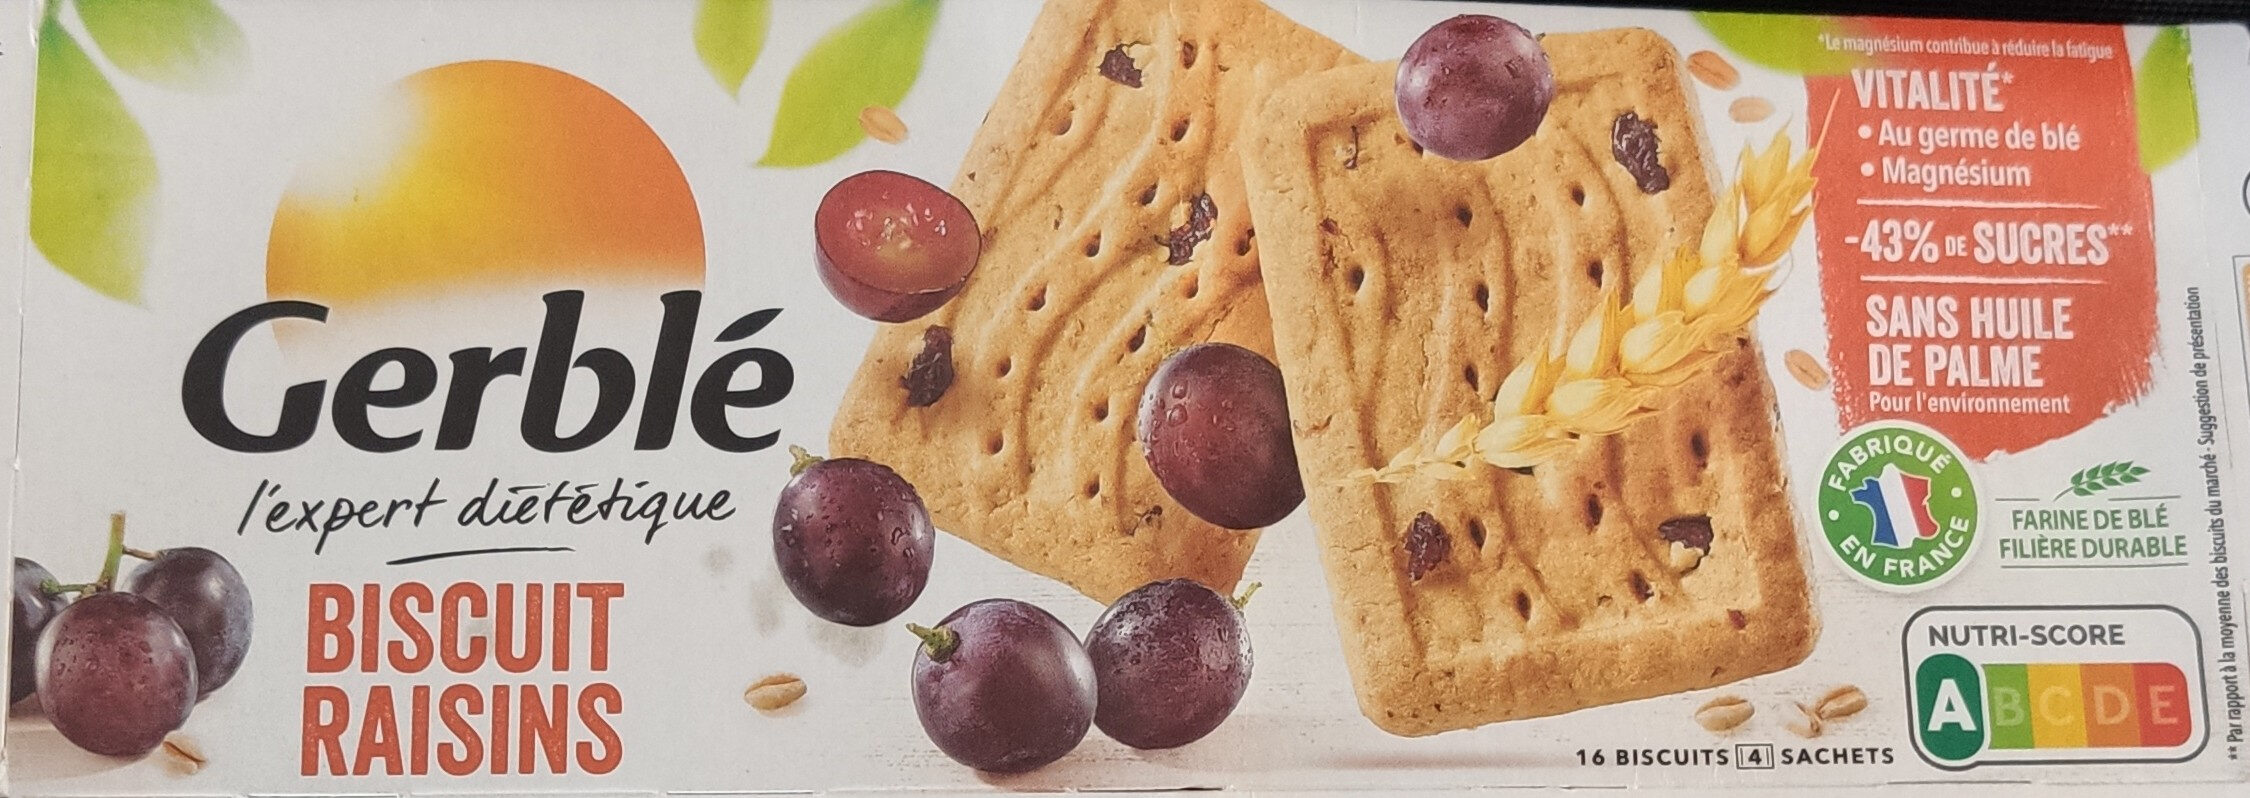 Biscuit raisins - Producto - fr